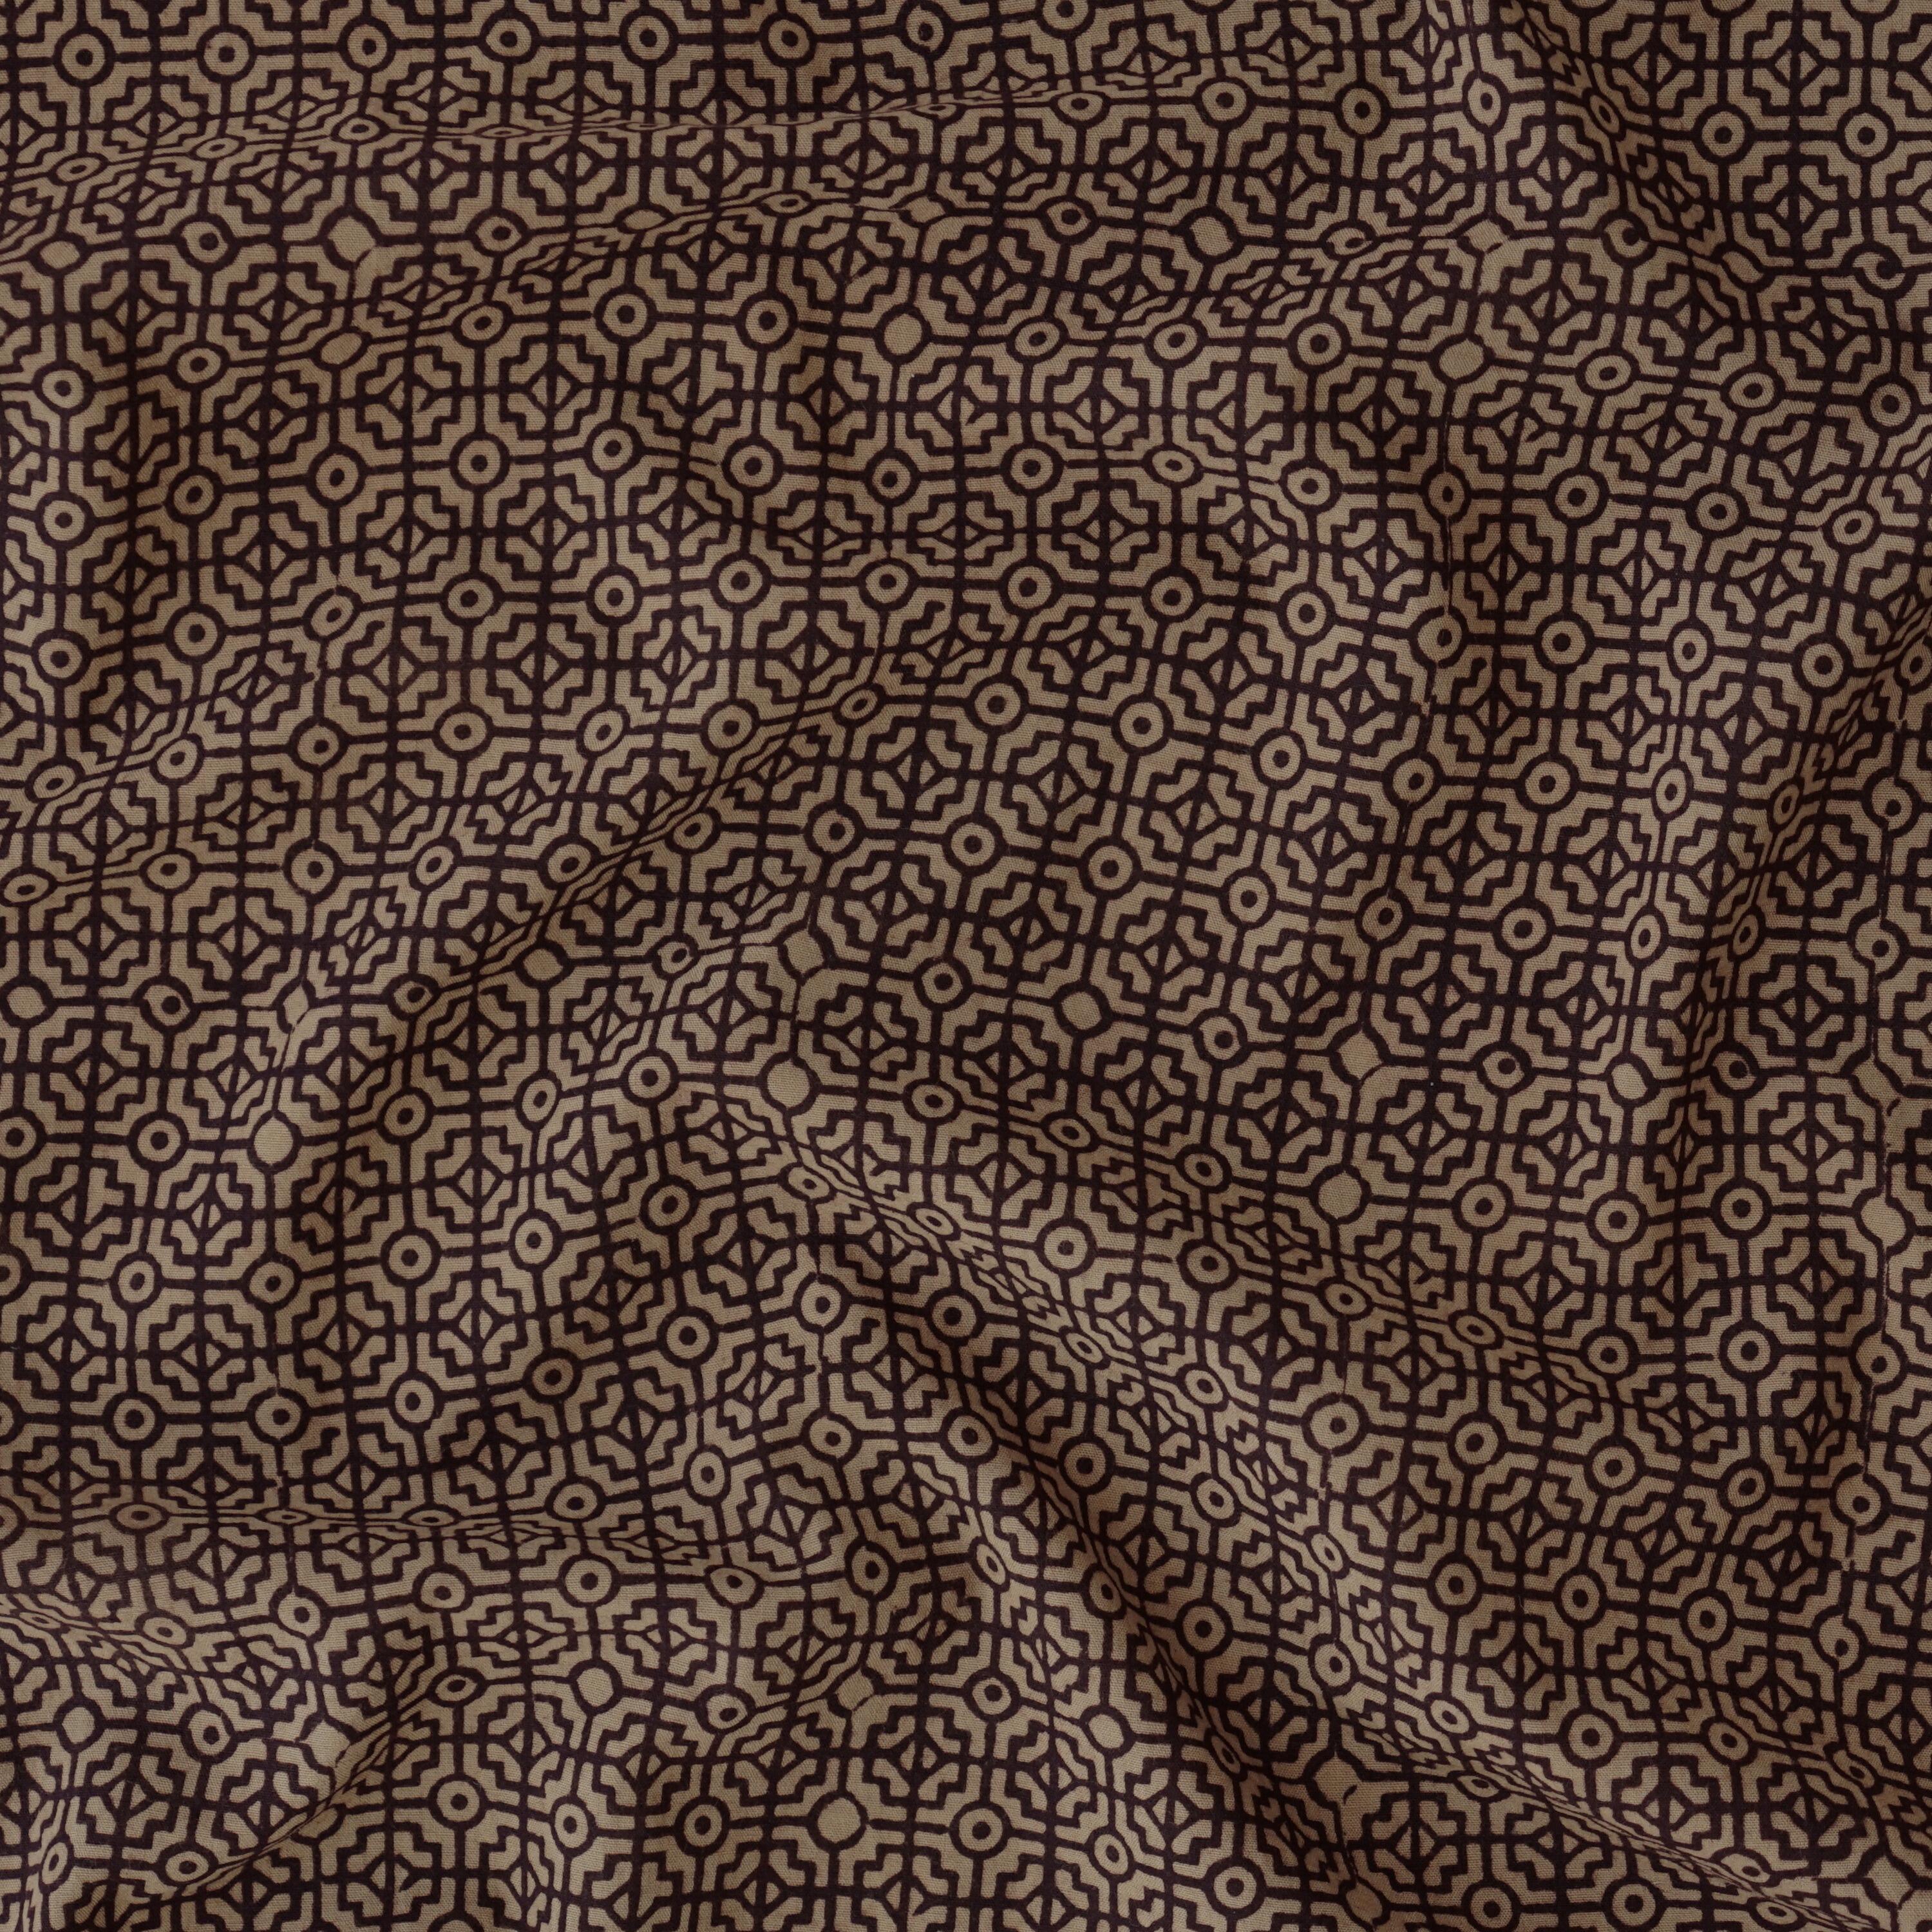 100% Block-Printed Cotton Fabric From India - Bagh Method - Iron Rust Black & Indigosol Khaki - Mystic Musings Print - Contrast